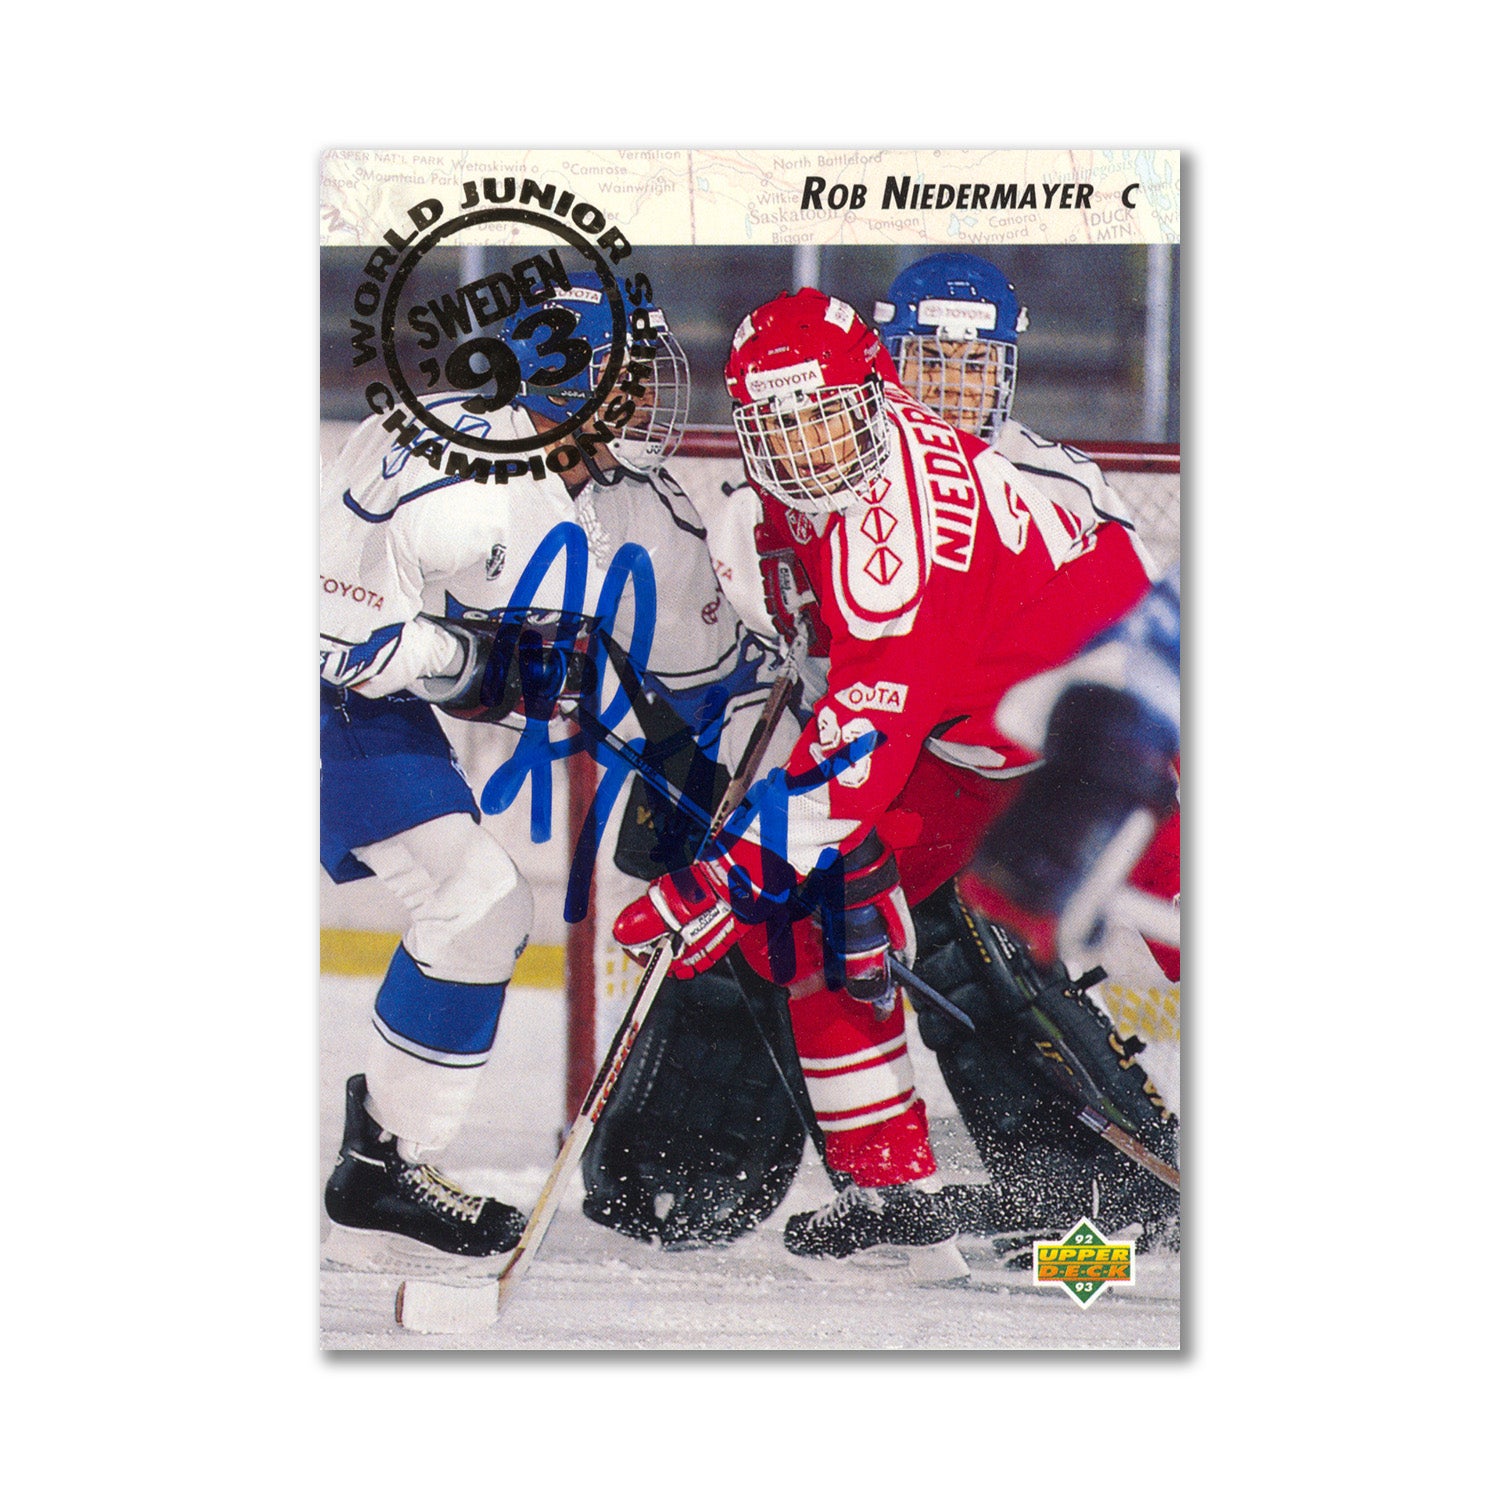 Autographed 1992-93 Upper Deck #593 Rob Niedermayer Rookie Card